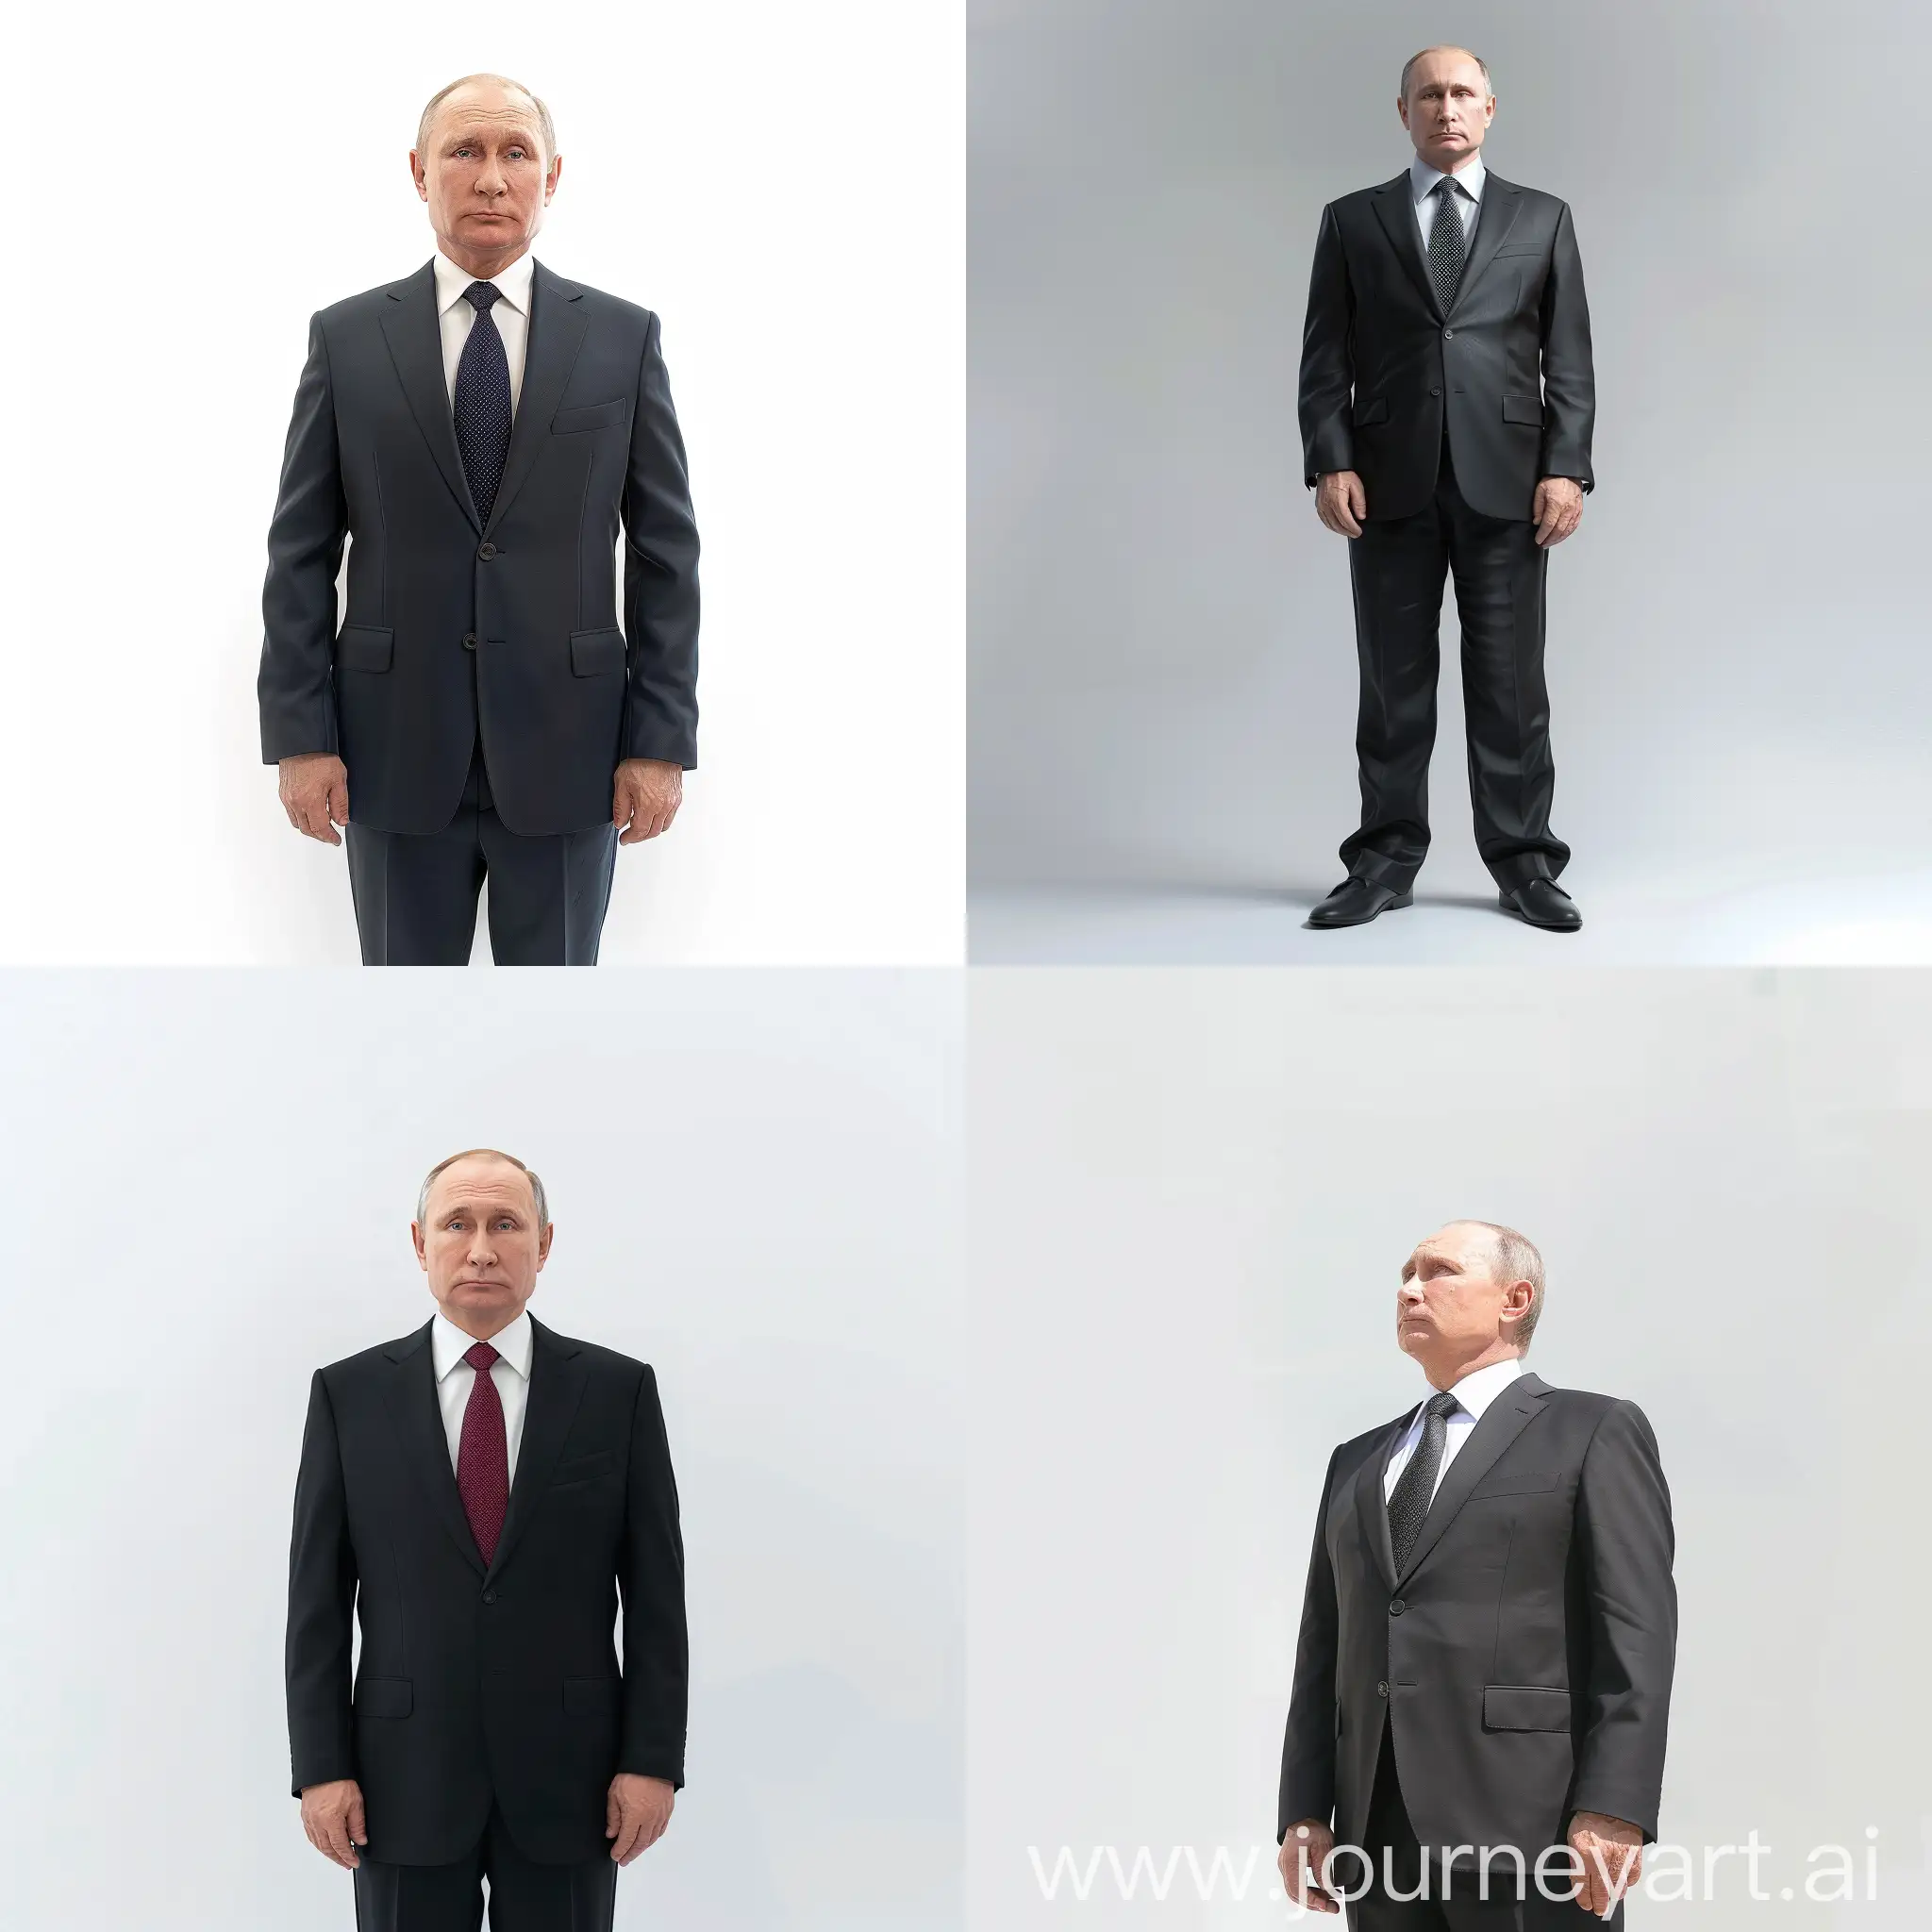 Vladimir-Putin-Portrait-in-Hyper-Realistic-Detail-against-White-Background